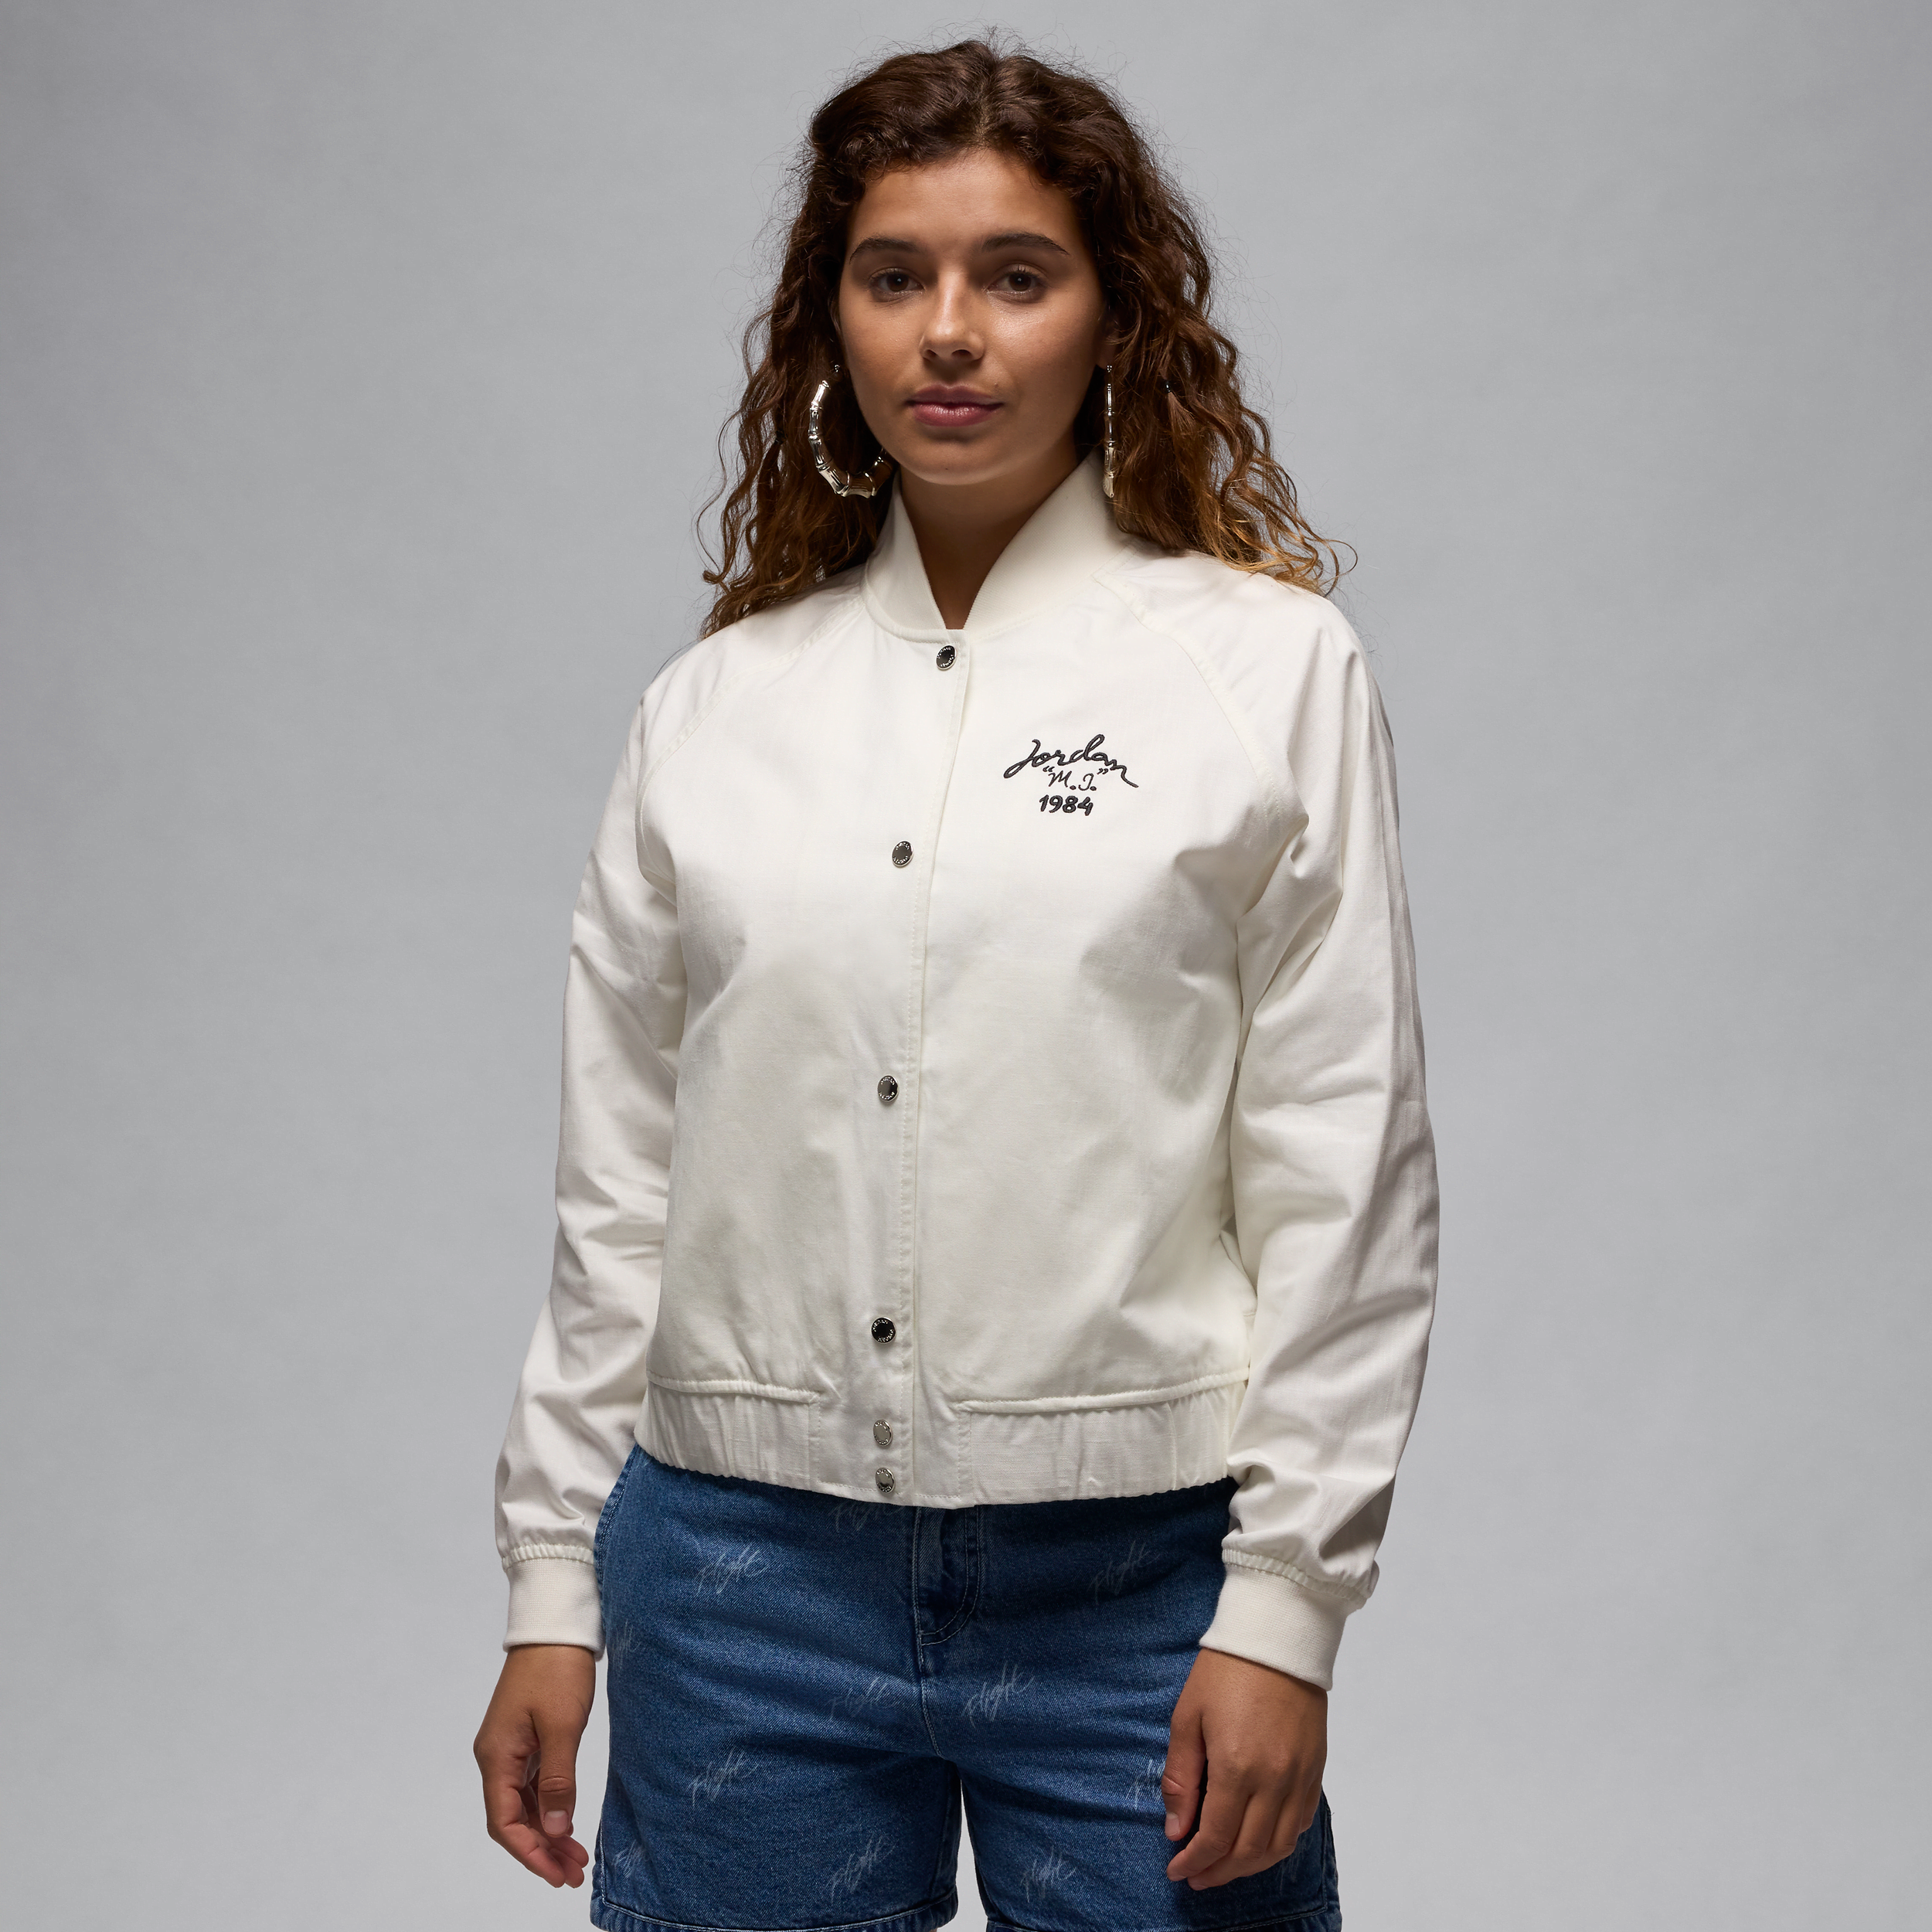 jordan giacca stile college  – donna - bianco